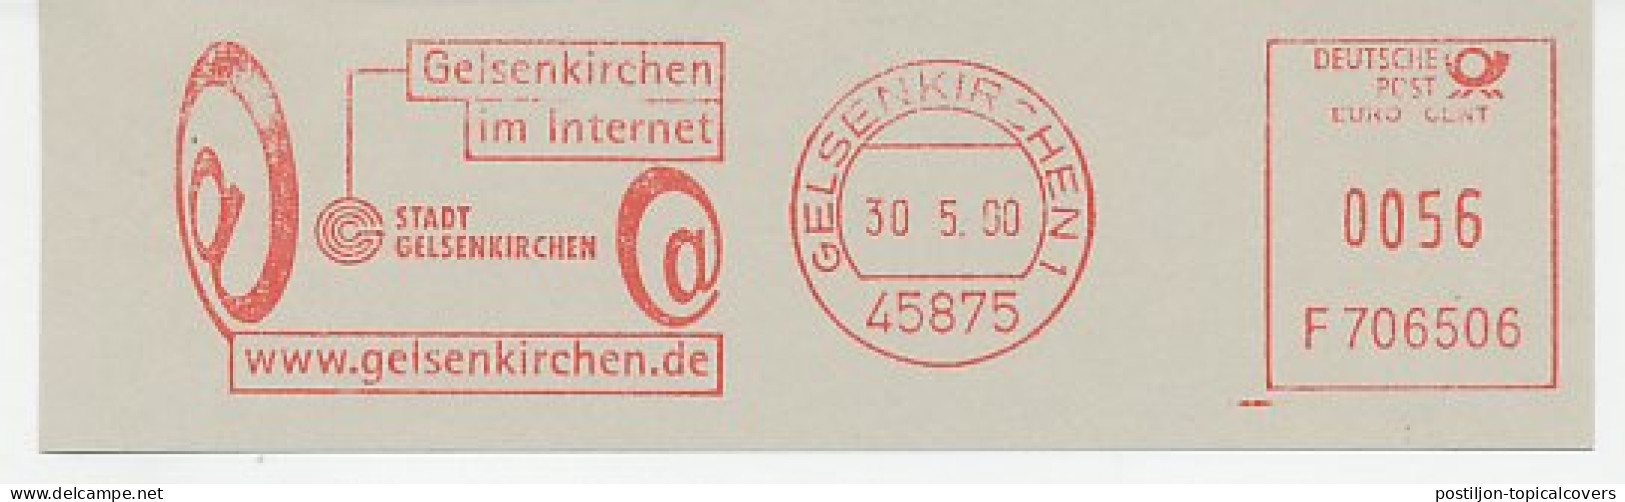 Meter Cut Germany 2000 @ - Internet - Informatik